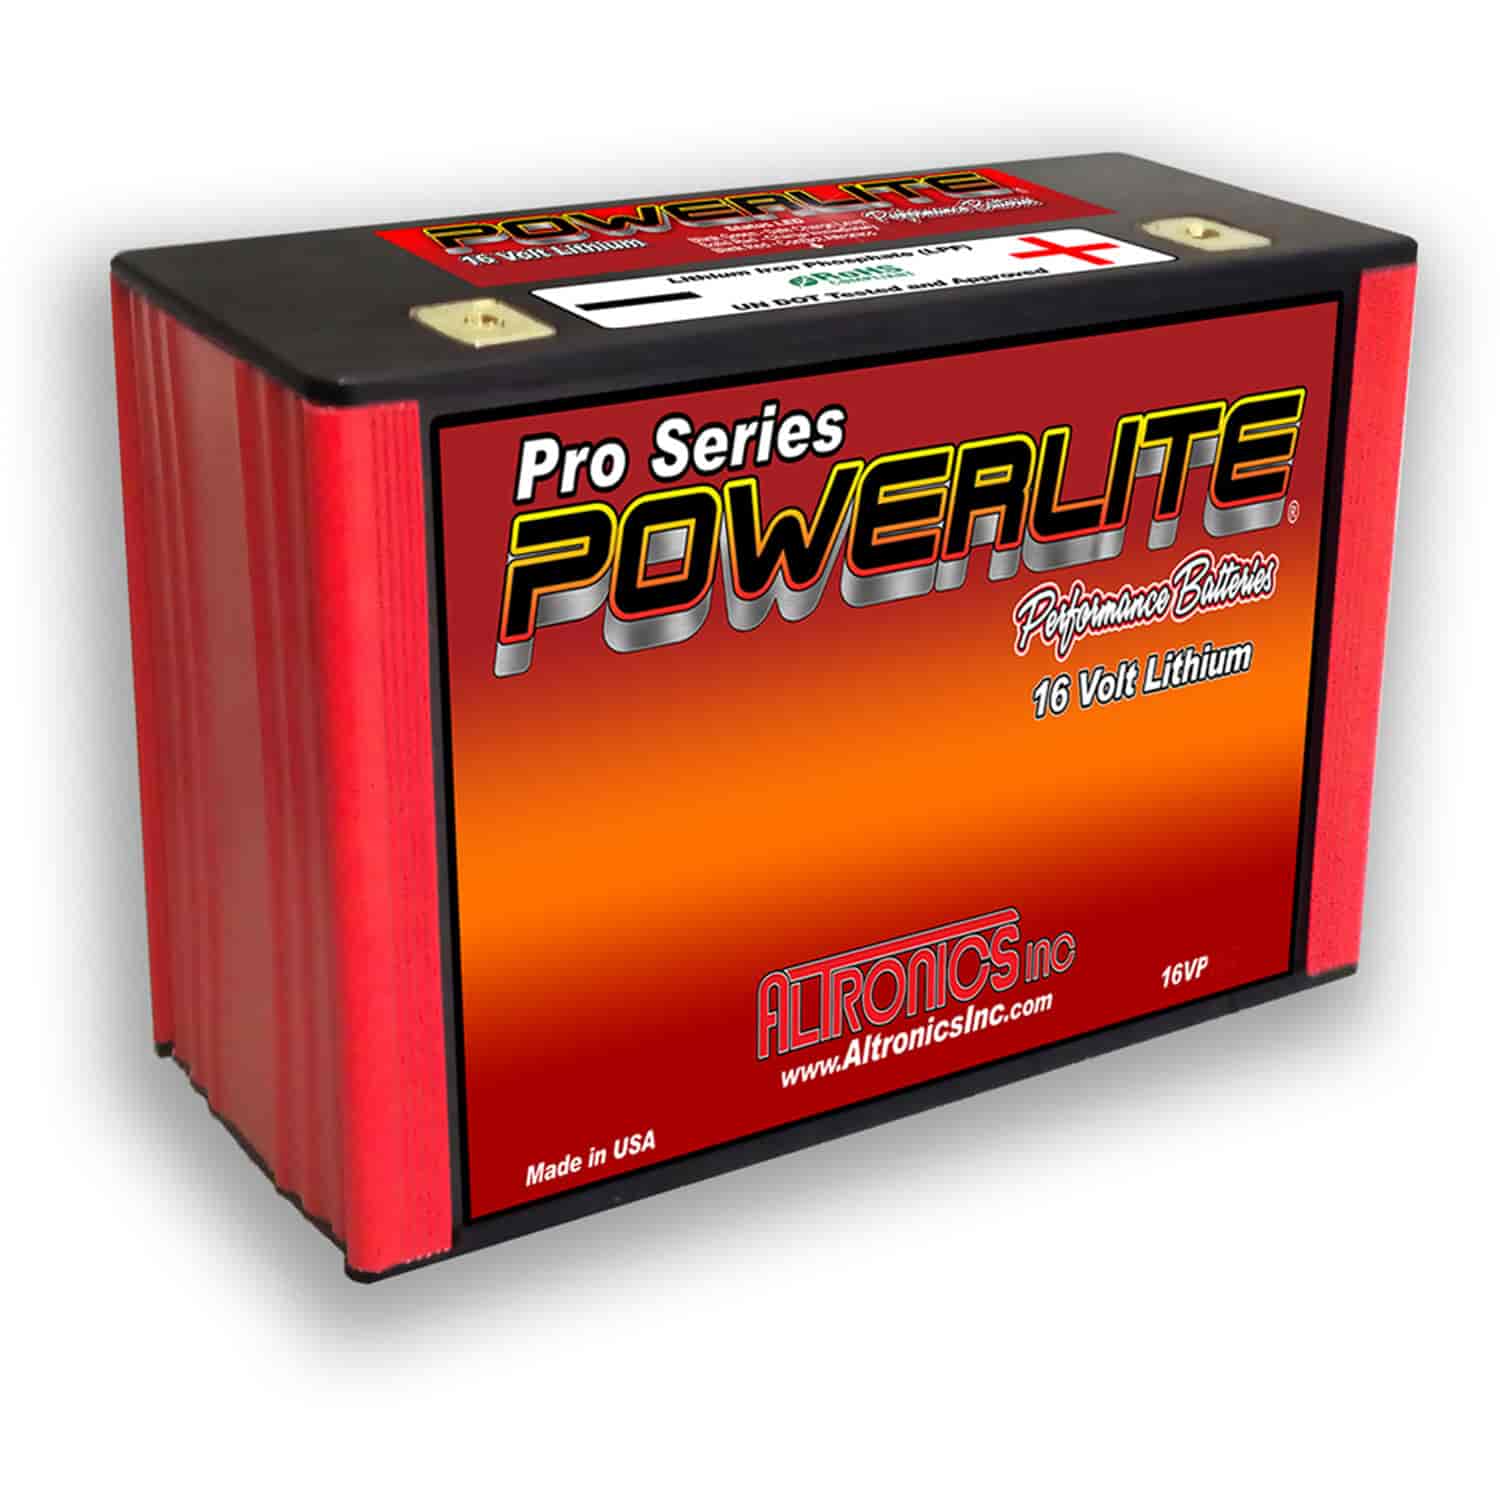 Powerlite Pro Series LiFePo4 2000 Lithium 16-Volt Battery